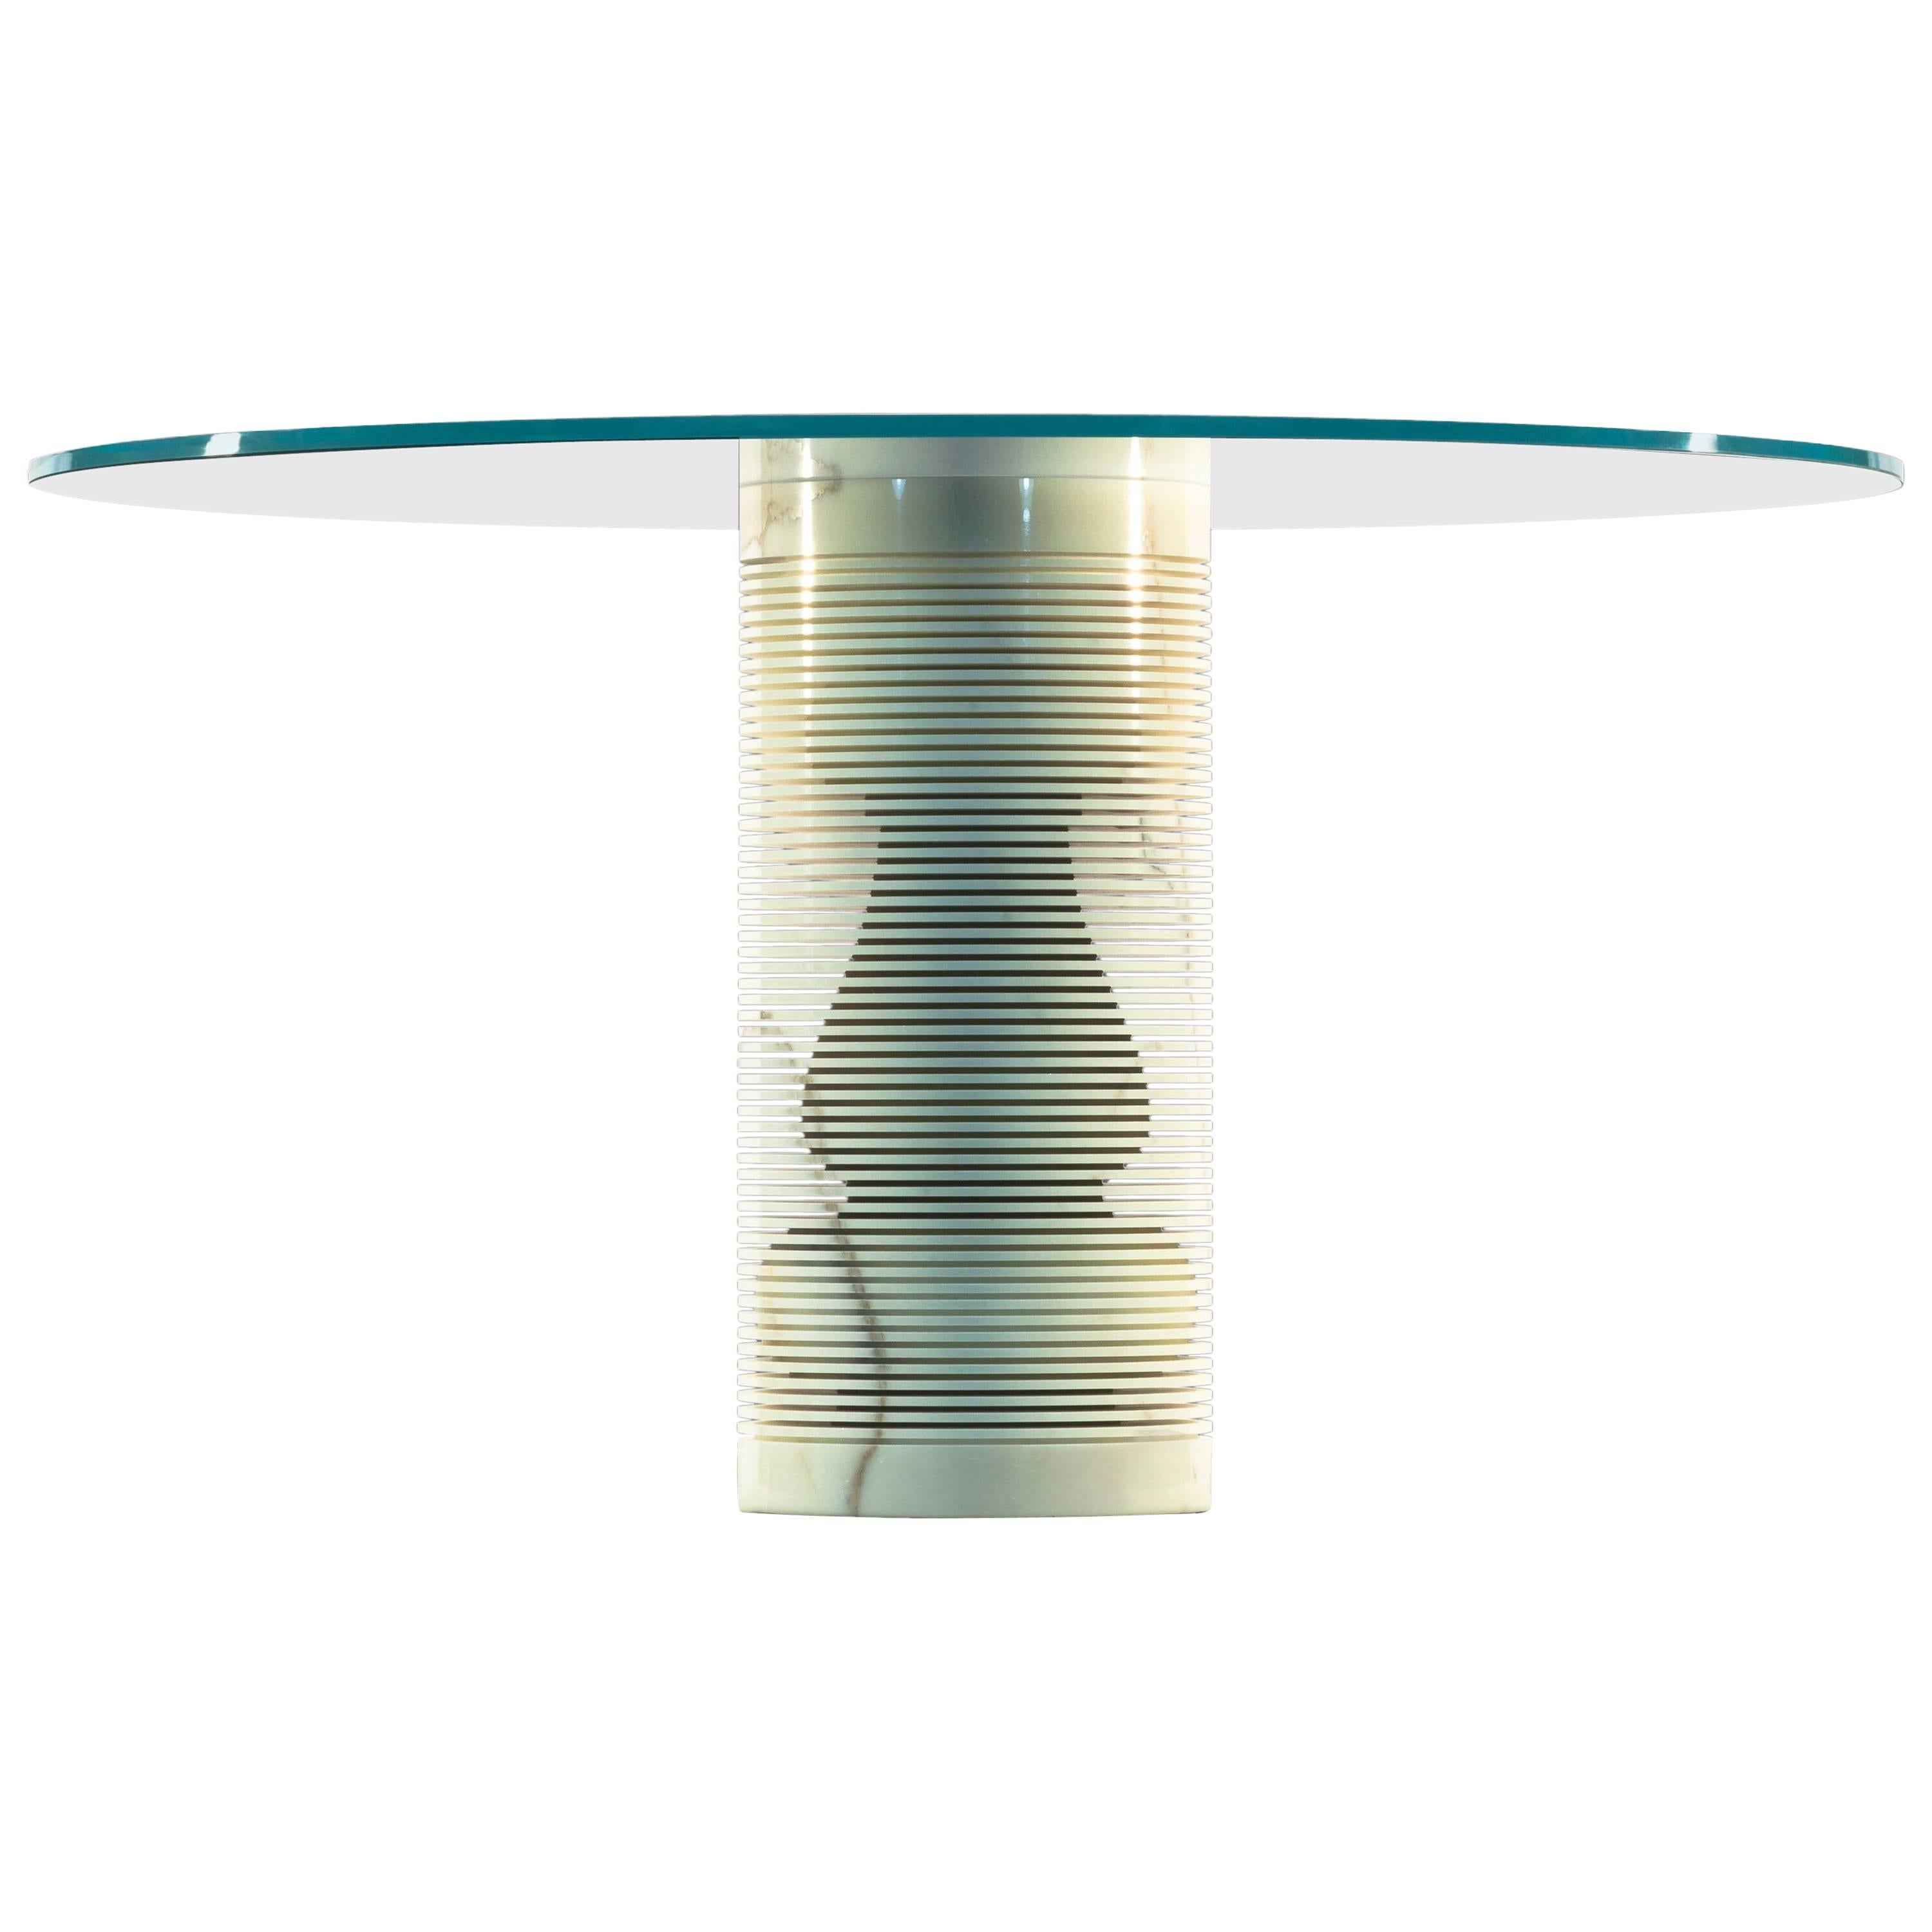 Introverso Marble Table by Paolo Ulian & Moreno Ratti for Carrara Design Factory For Sale